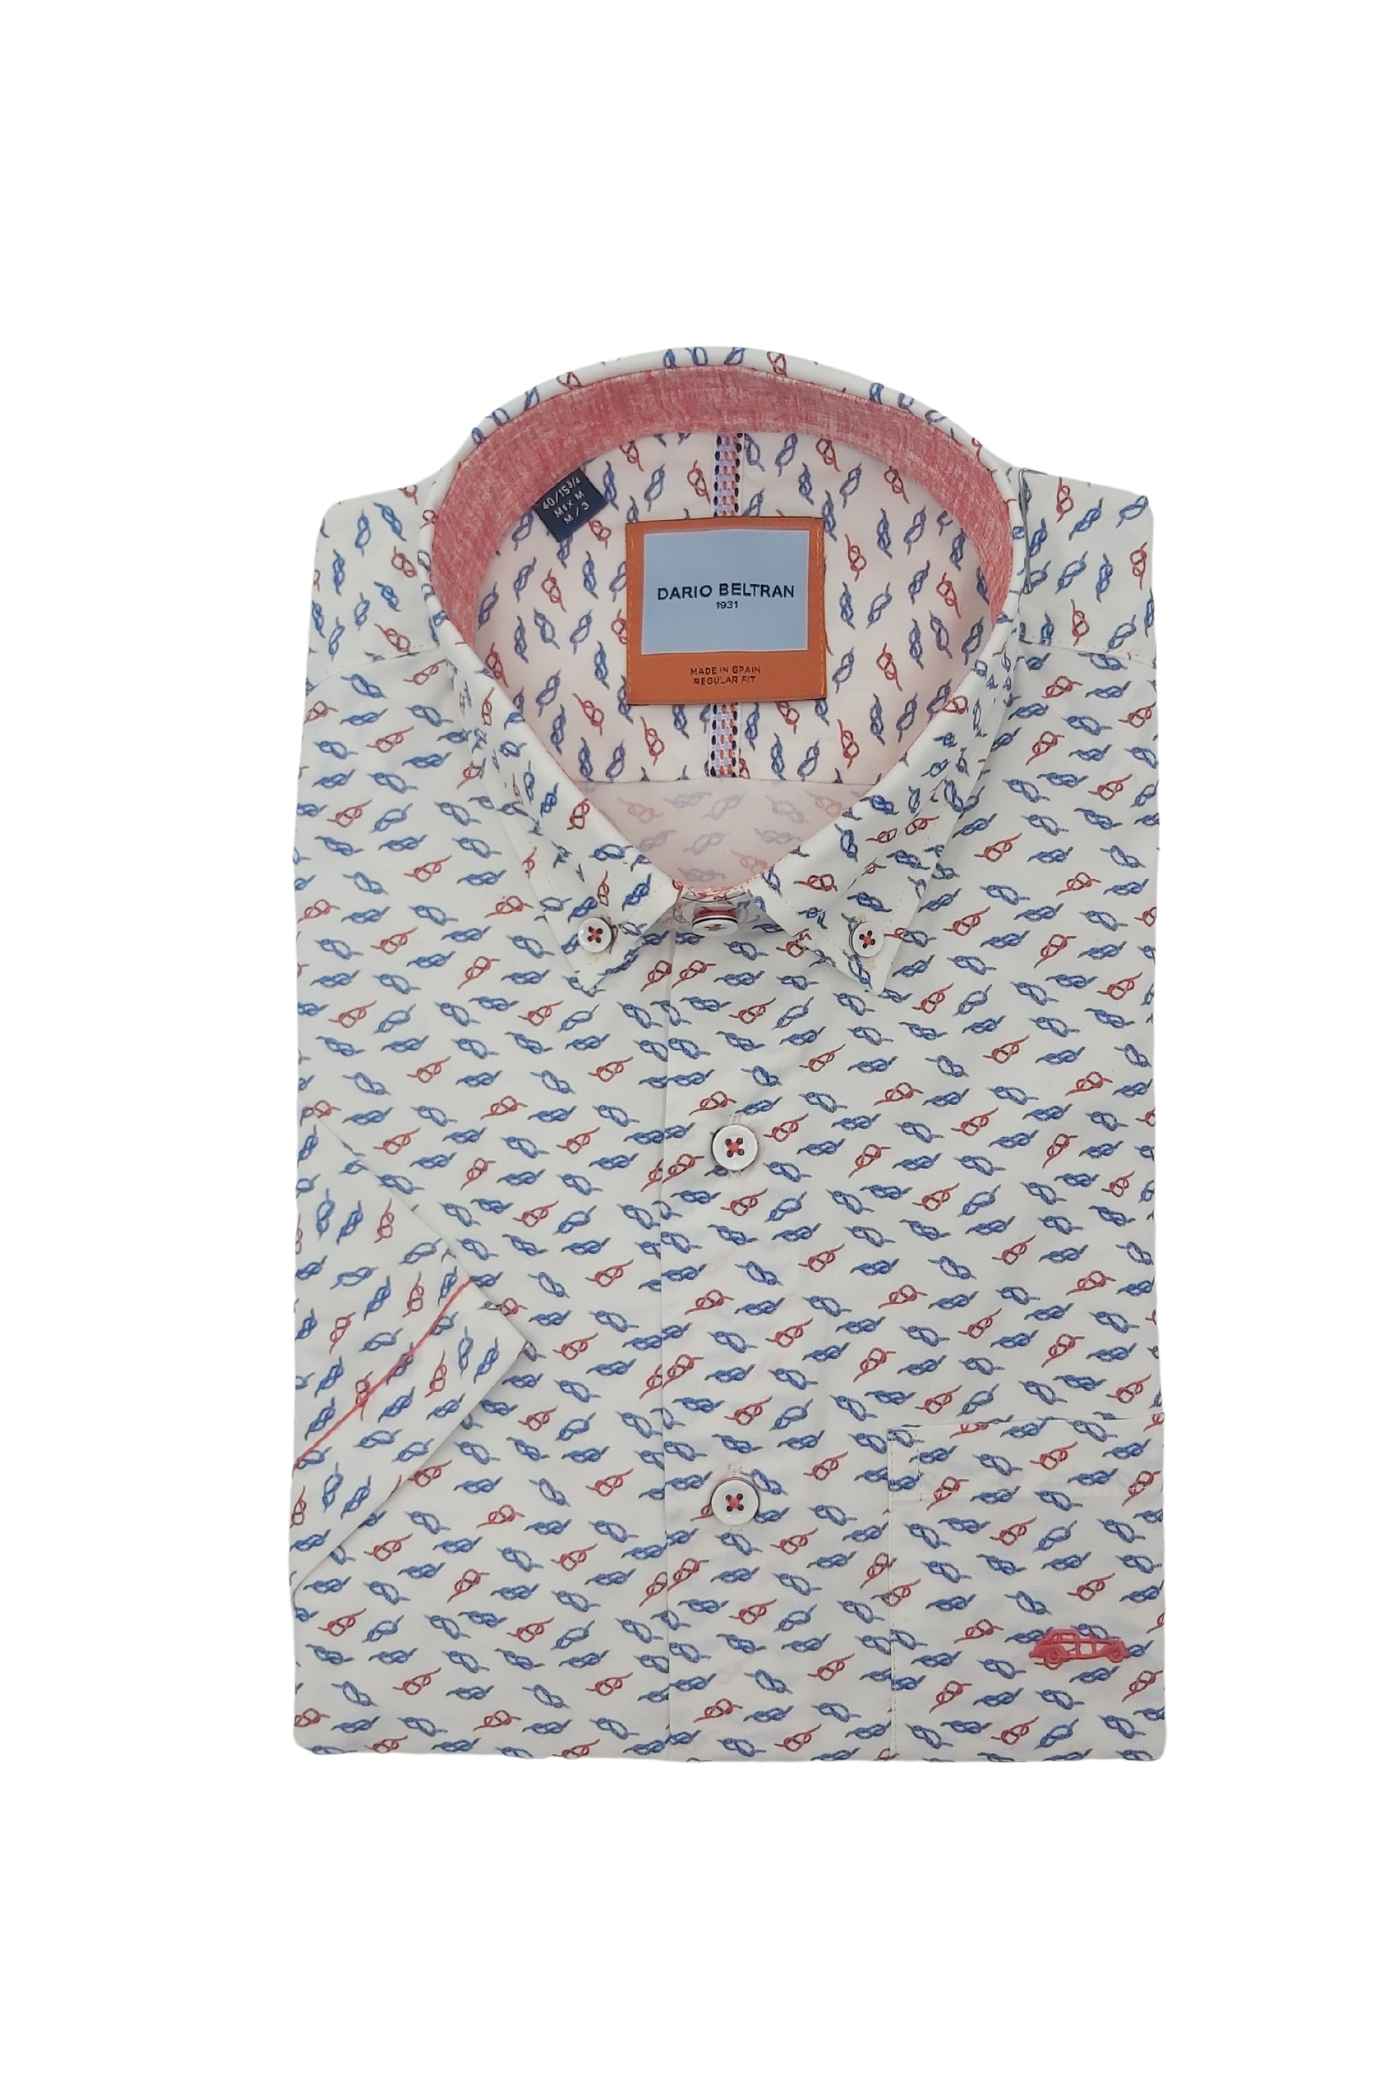 Men's Iznate White/Red/Blue Pattern Shirt-Front View